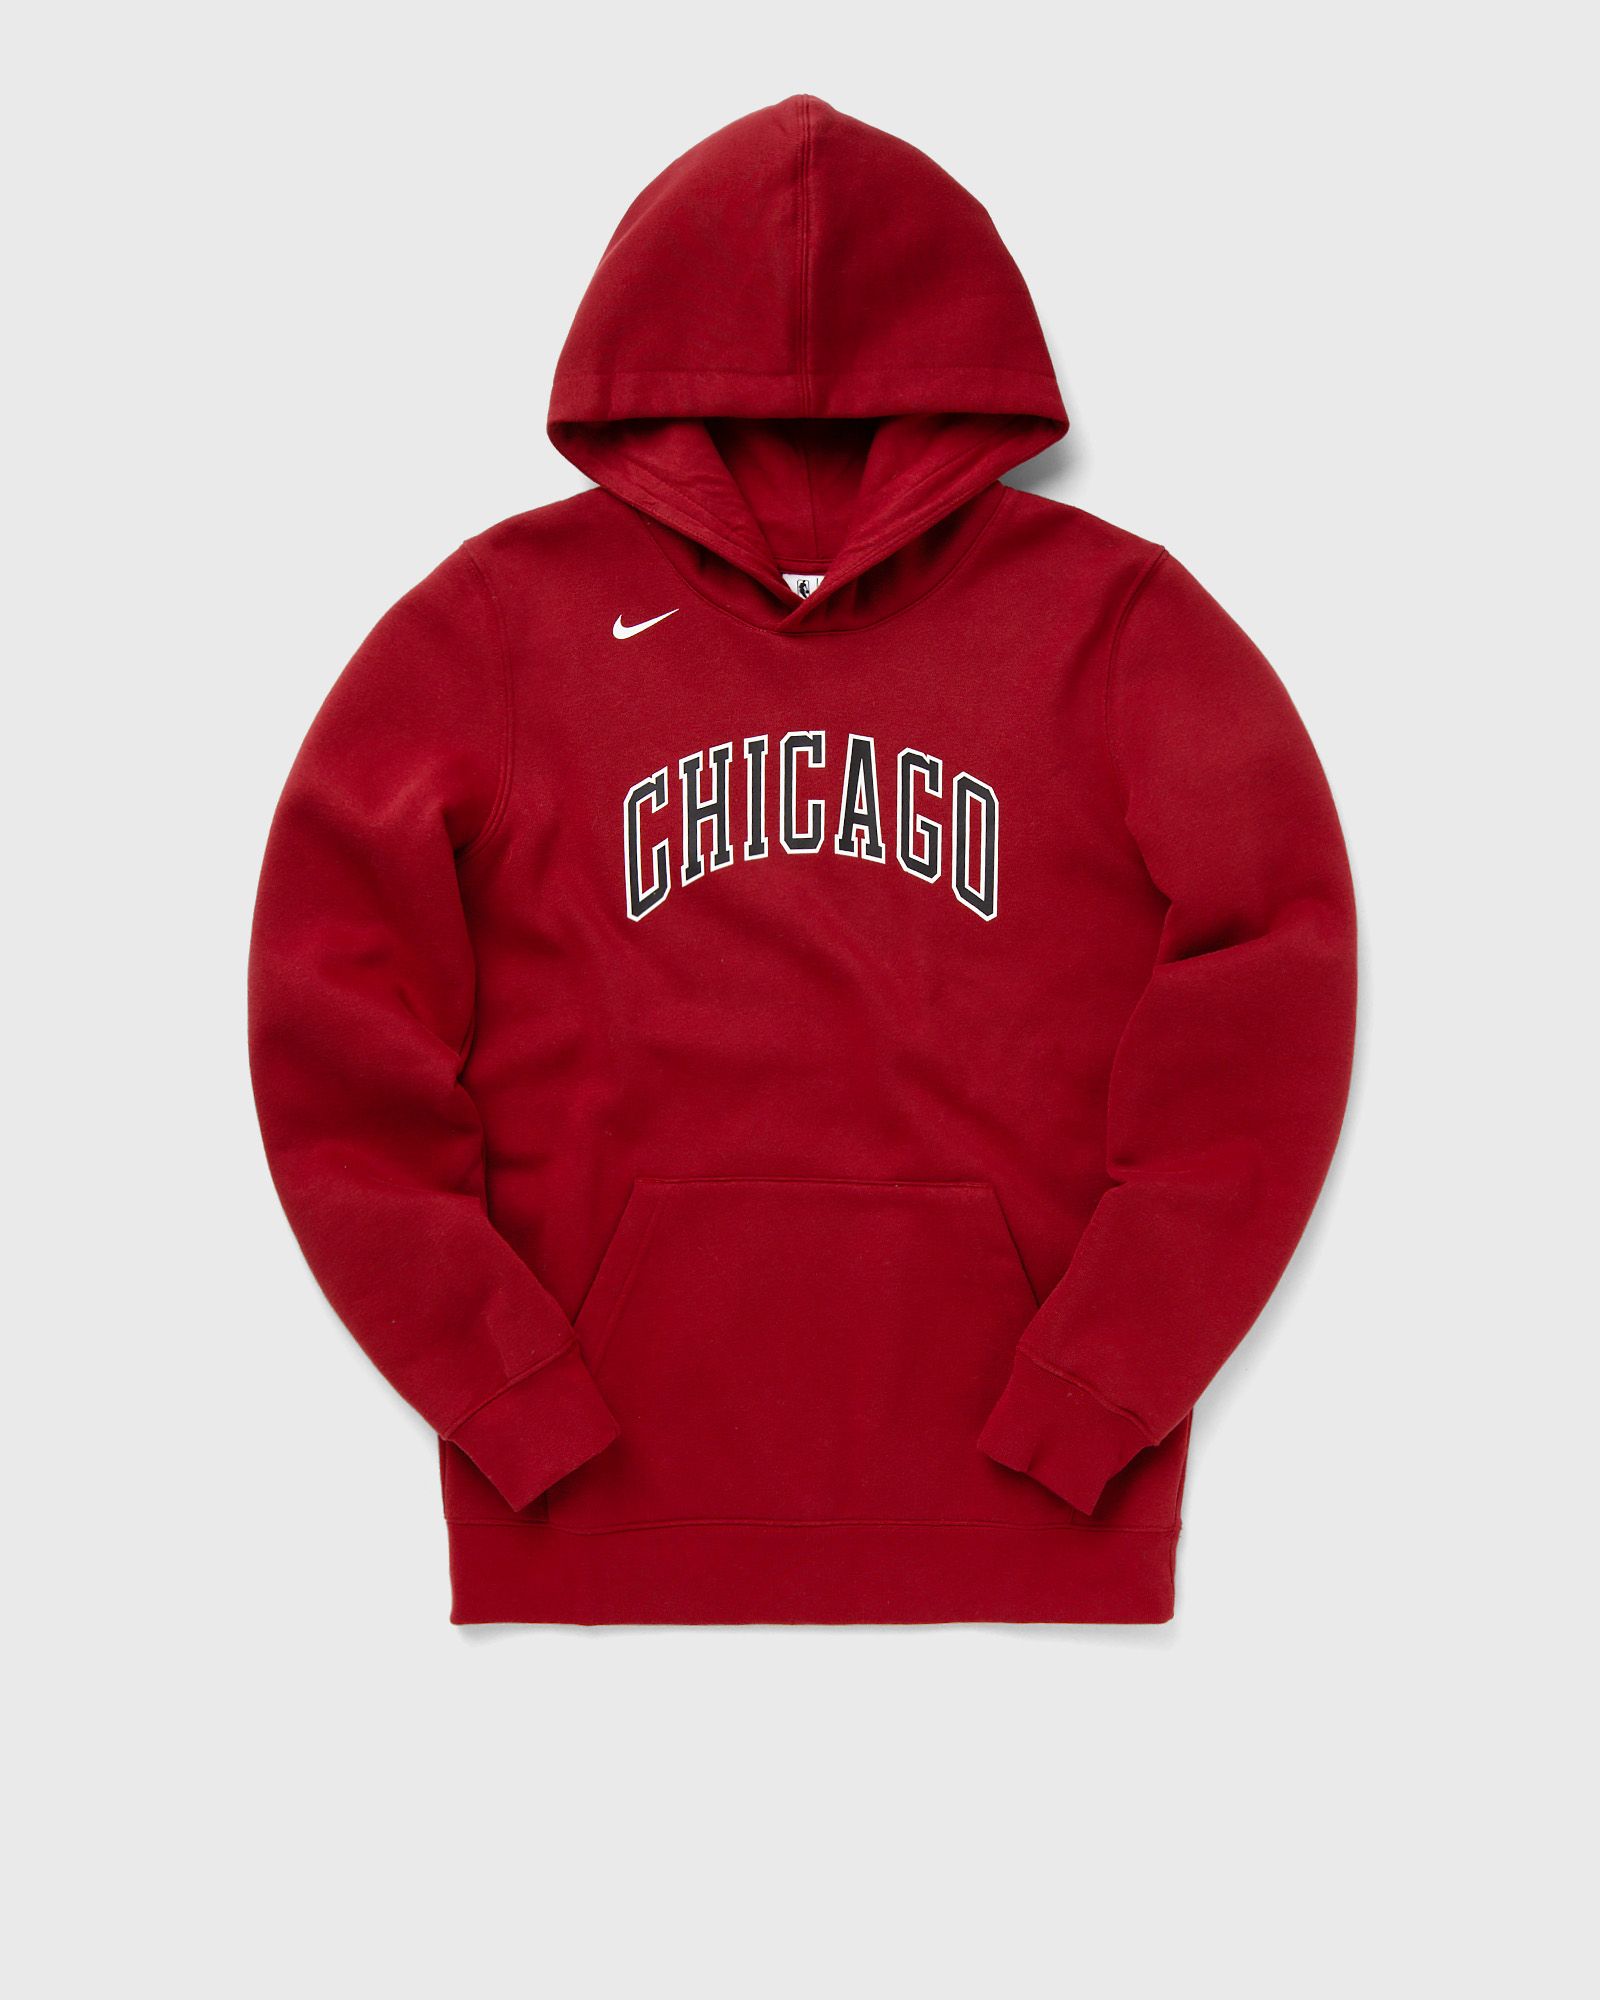 Nike - fleece pullover essential ce  hoodies red in größe:age 8-10 | eu 128-140